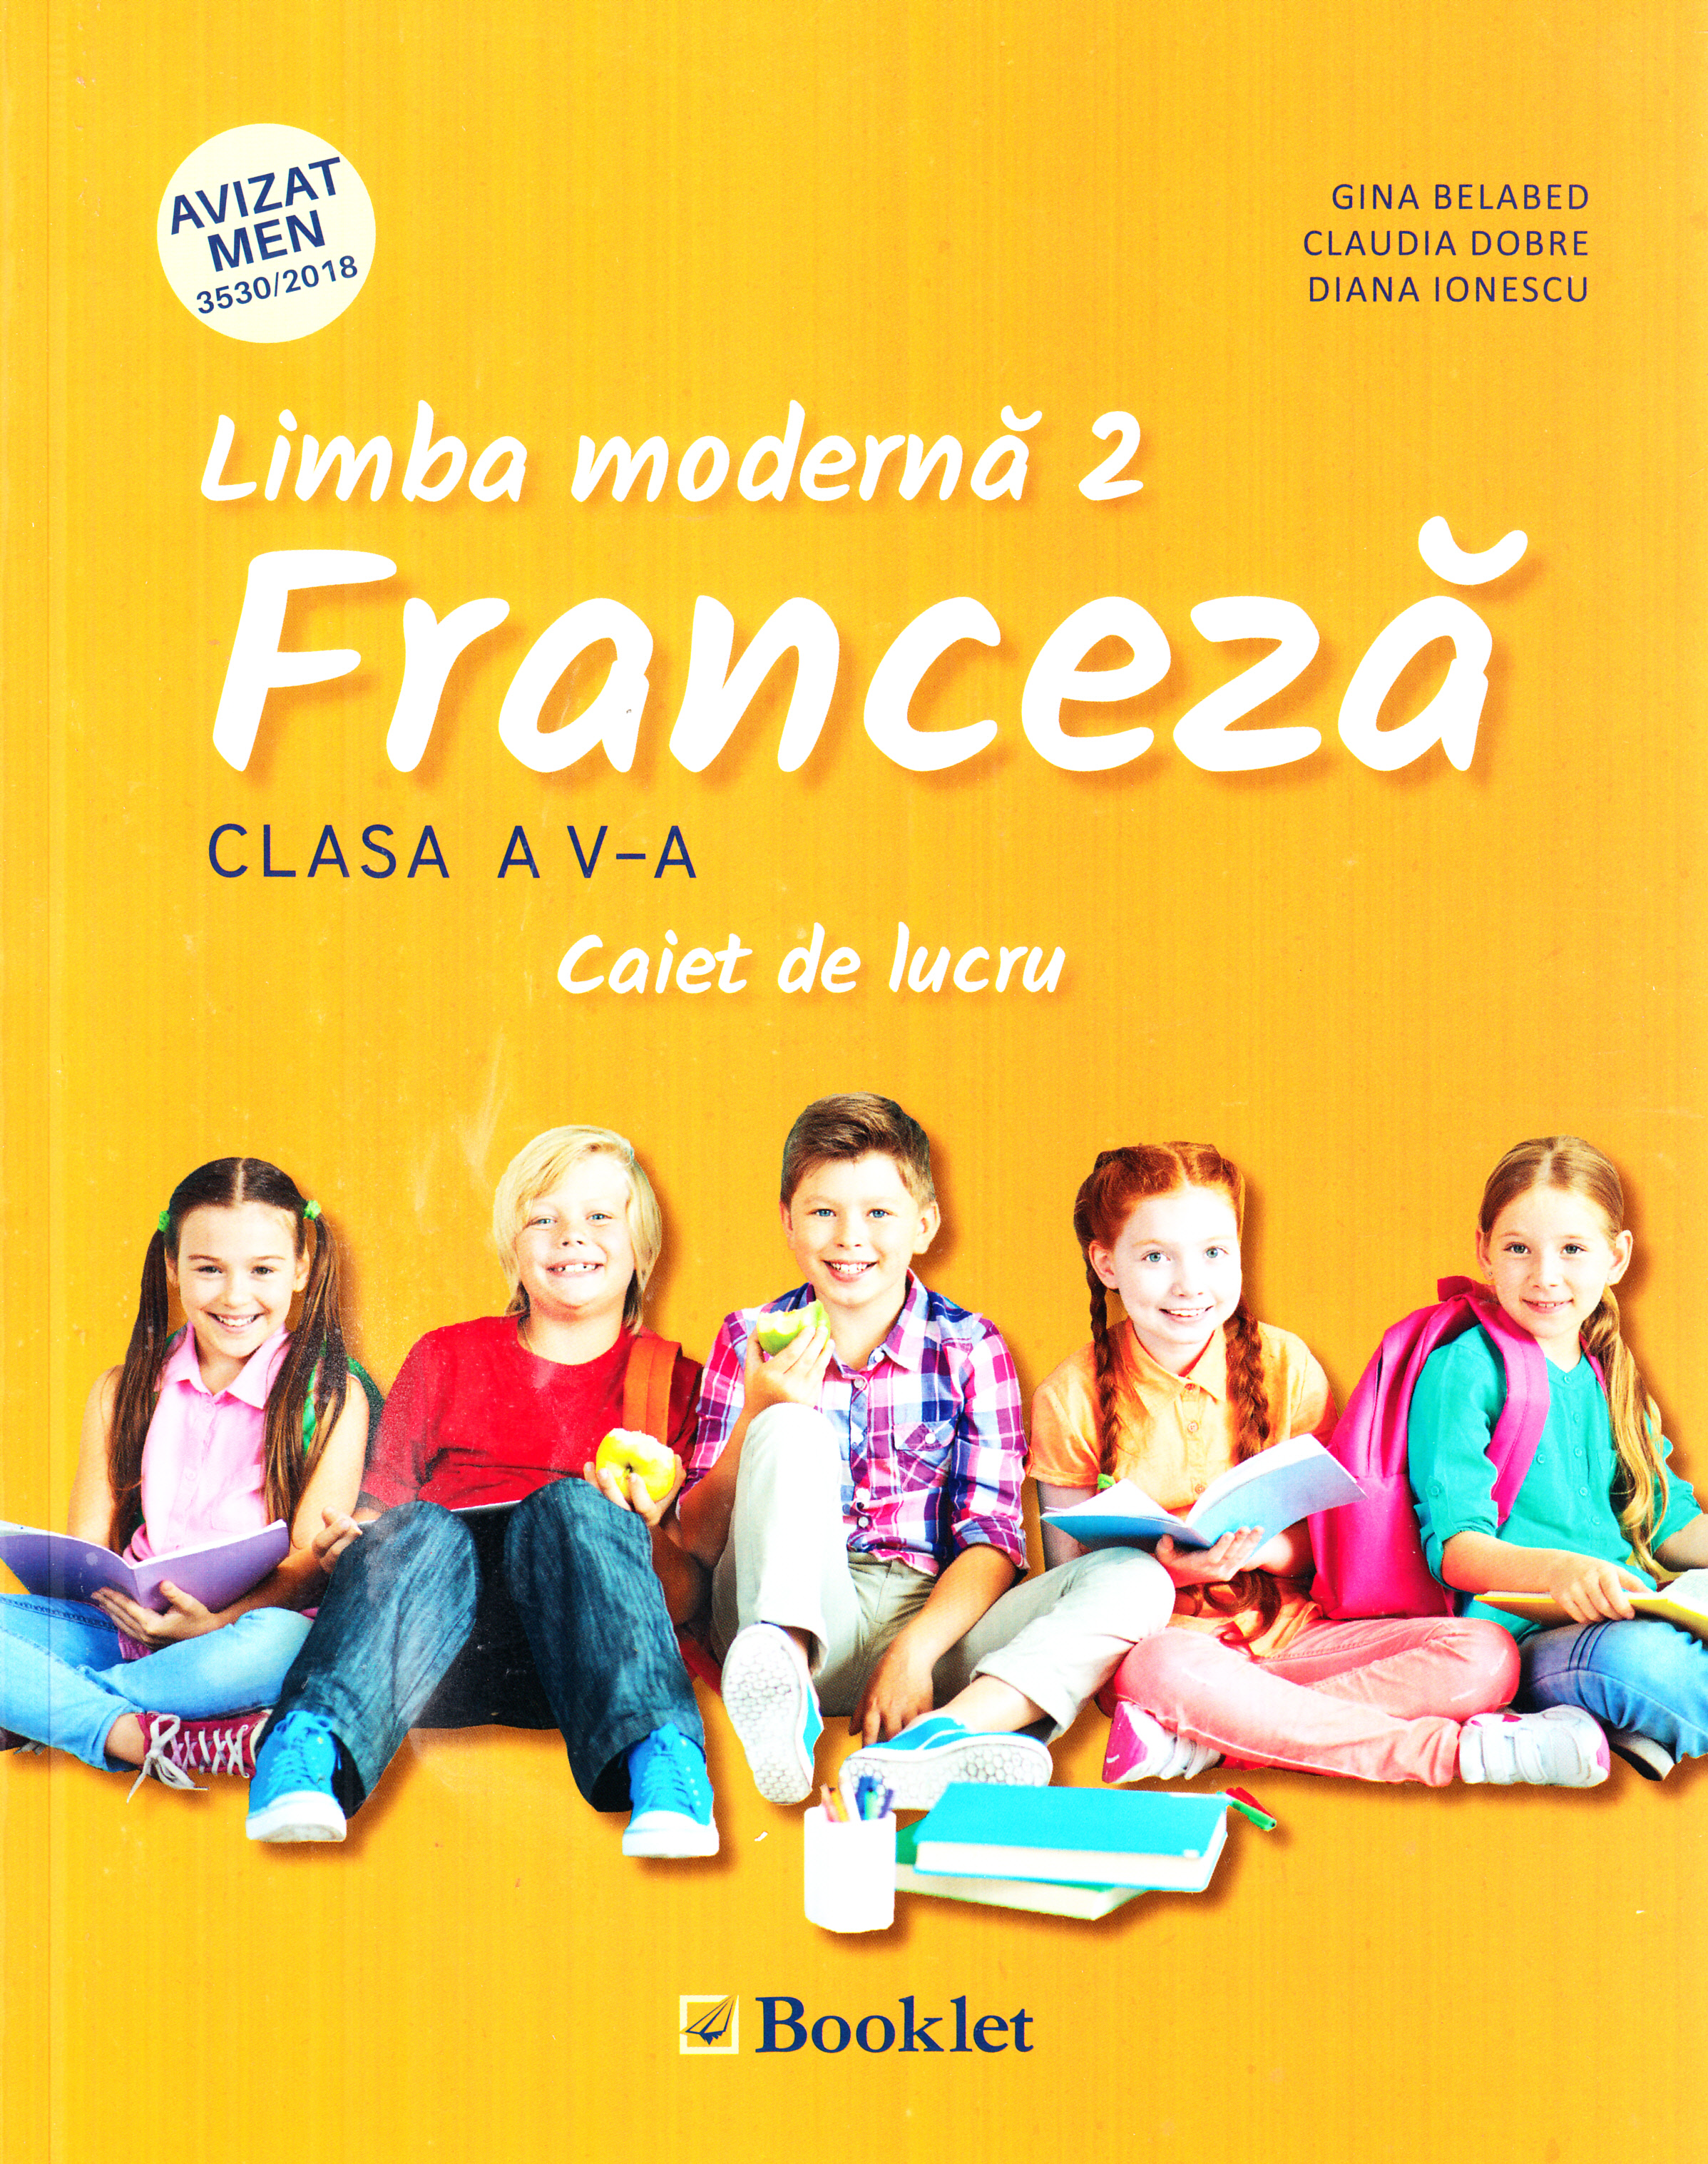 Limba moderna 2. Franceza - Clasa 5 - Caiet de lucru - Gina Belabed, Claudia Dobre